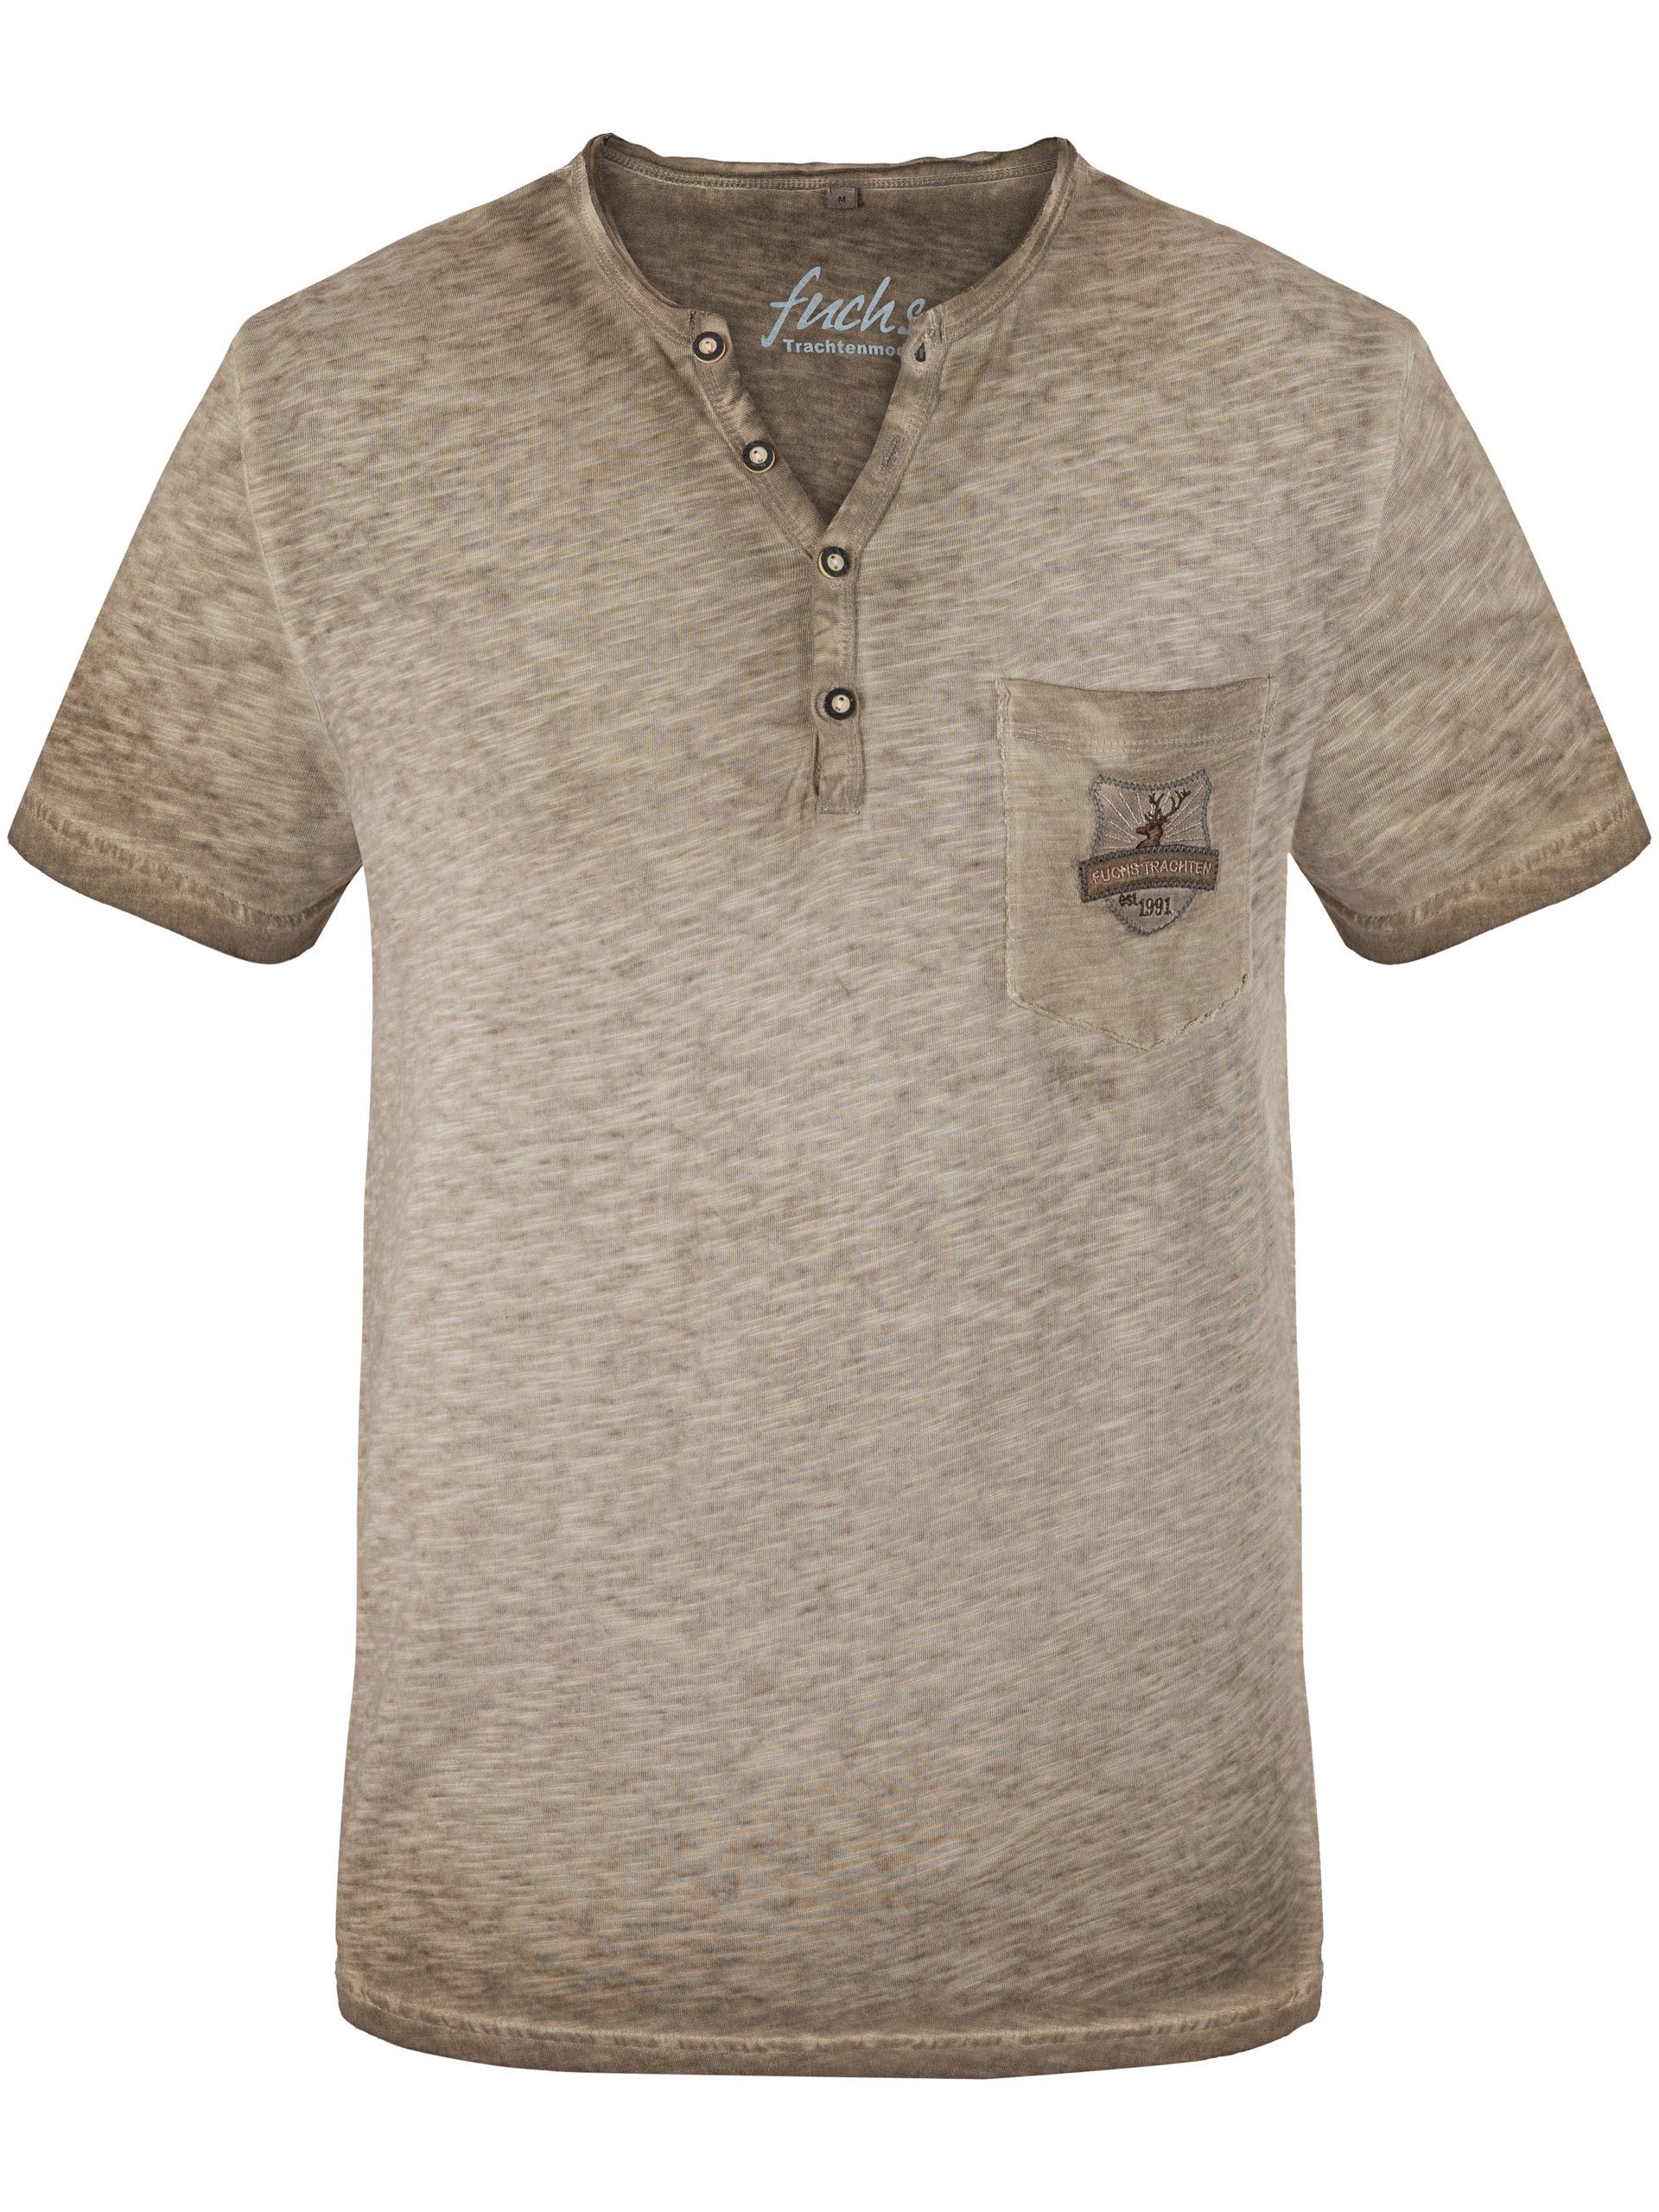 beliebt günstig FUCHS T-Shirt Trachten 100 T-Shirt Baumwolle Theo % sand aus